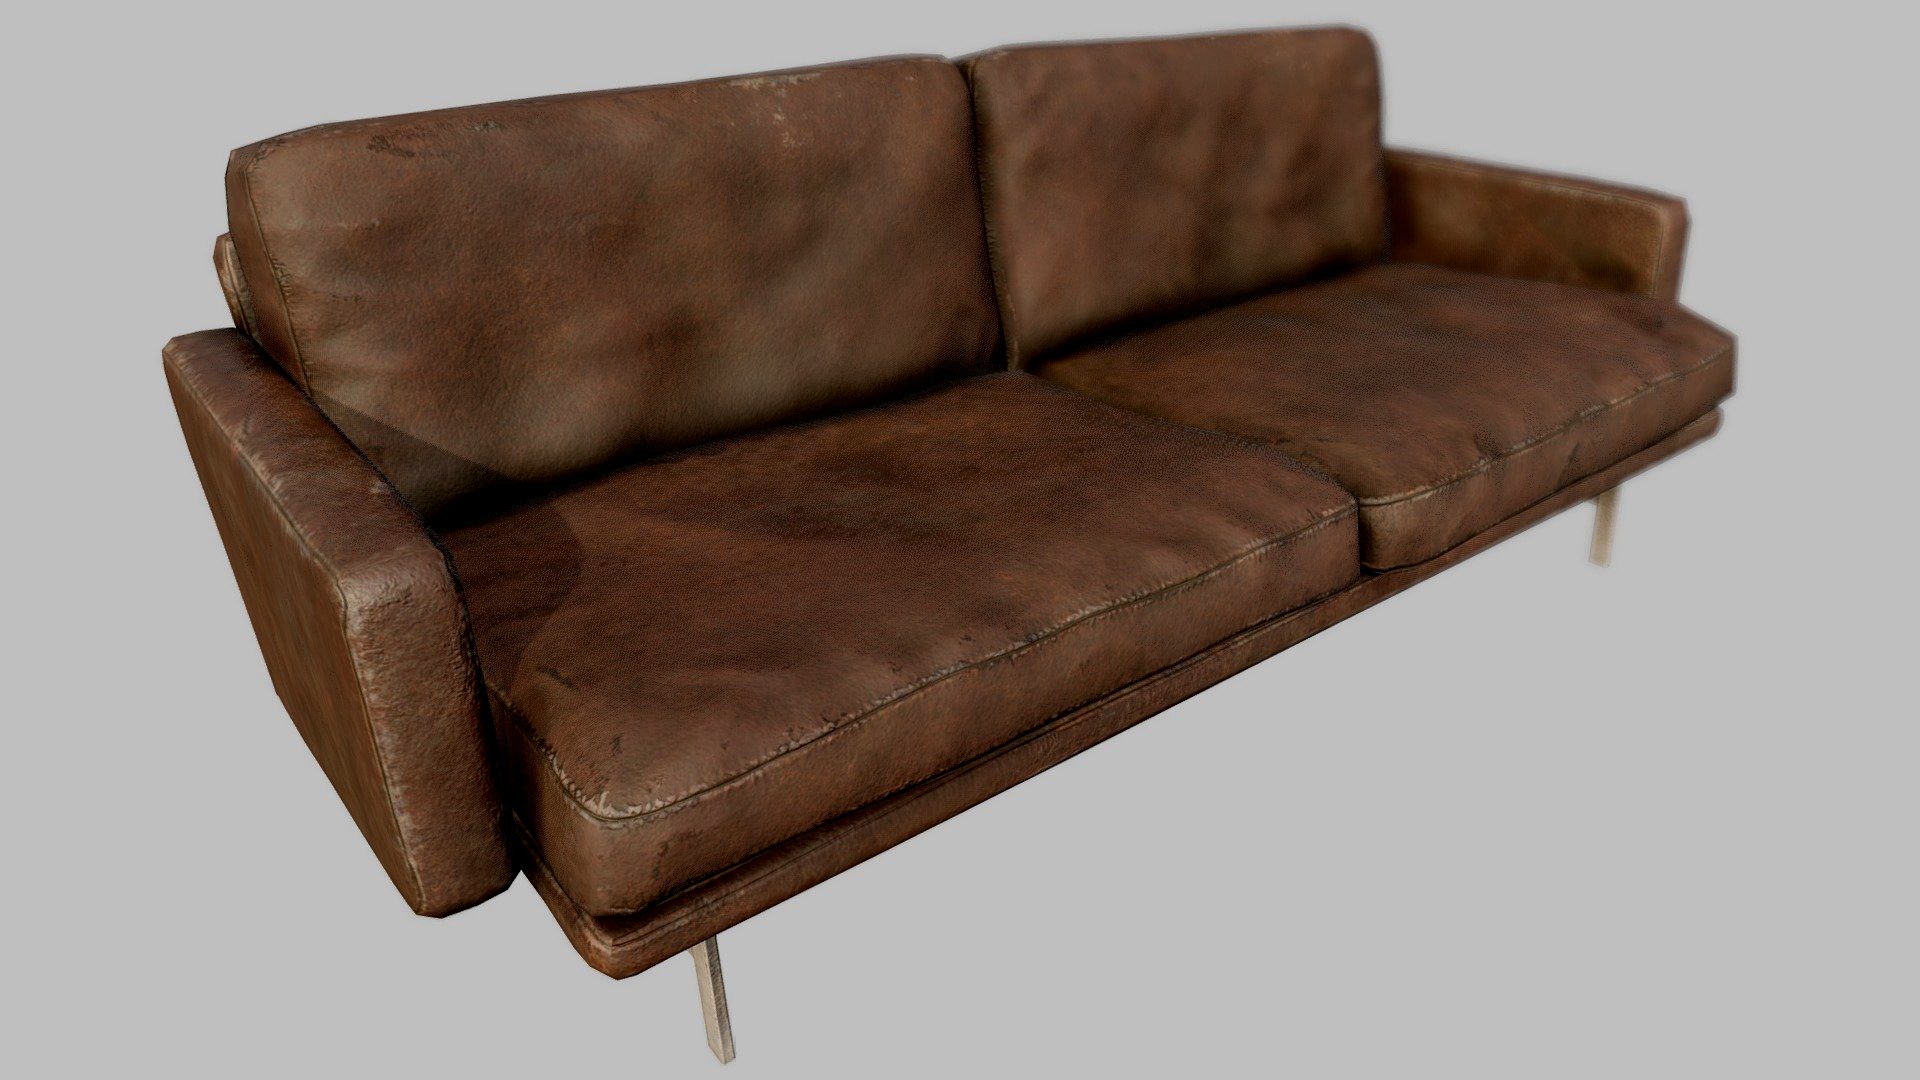 Design Couch 1 - Brown - Post-Apocalypse - PBR